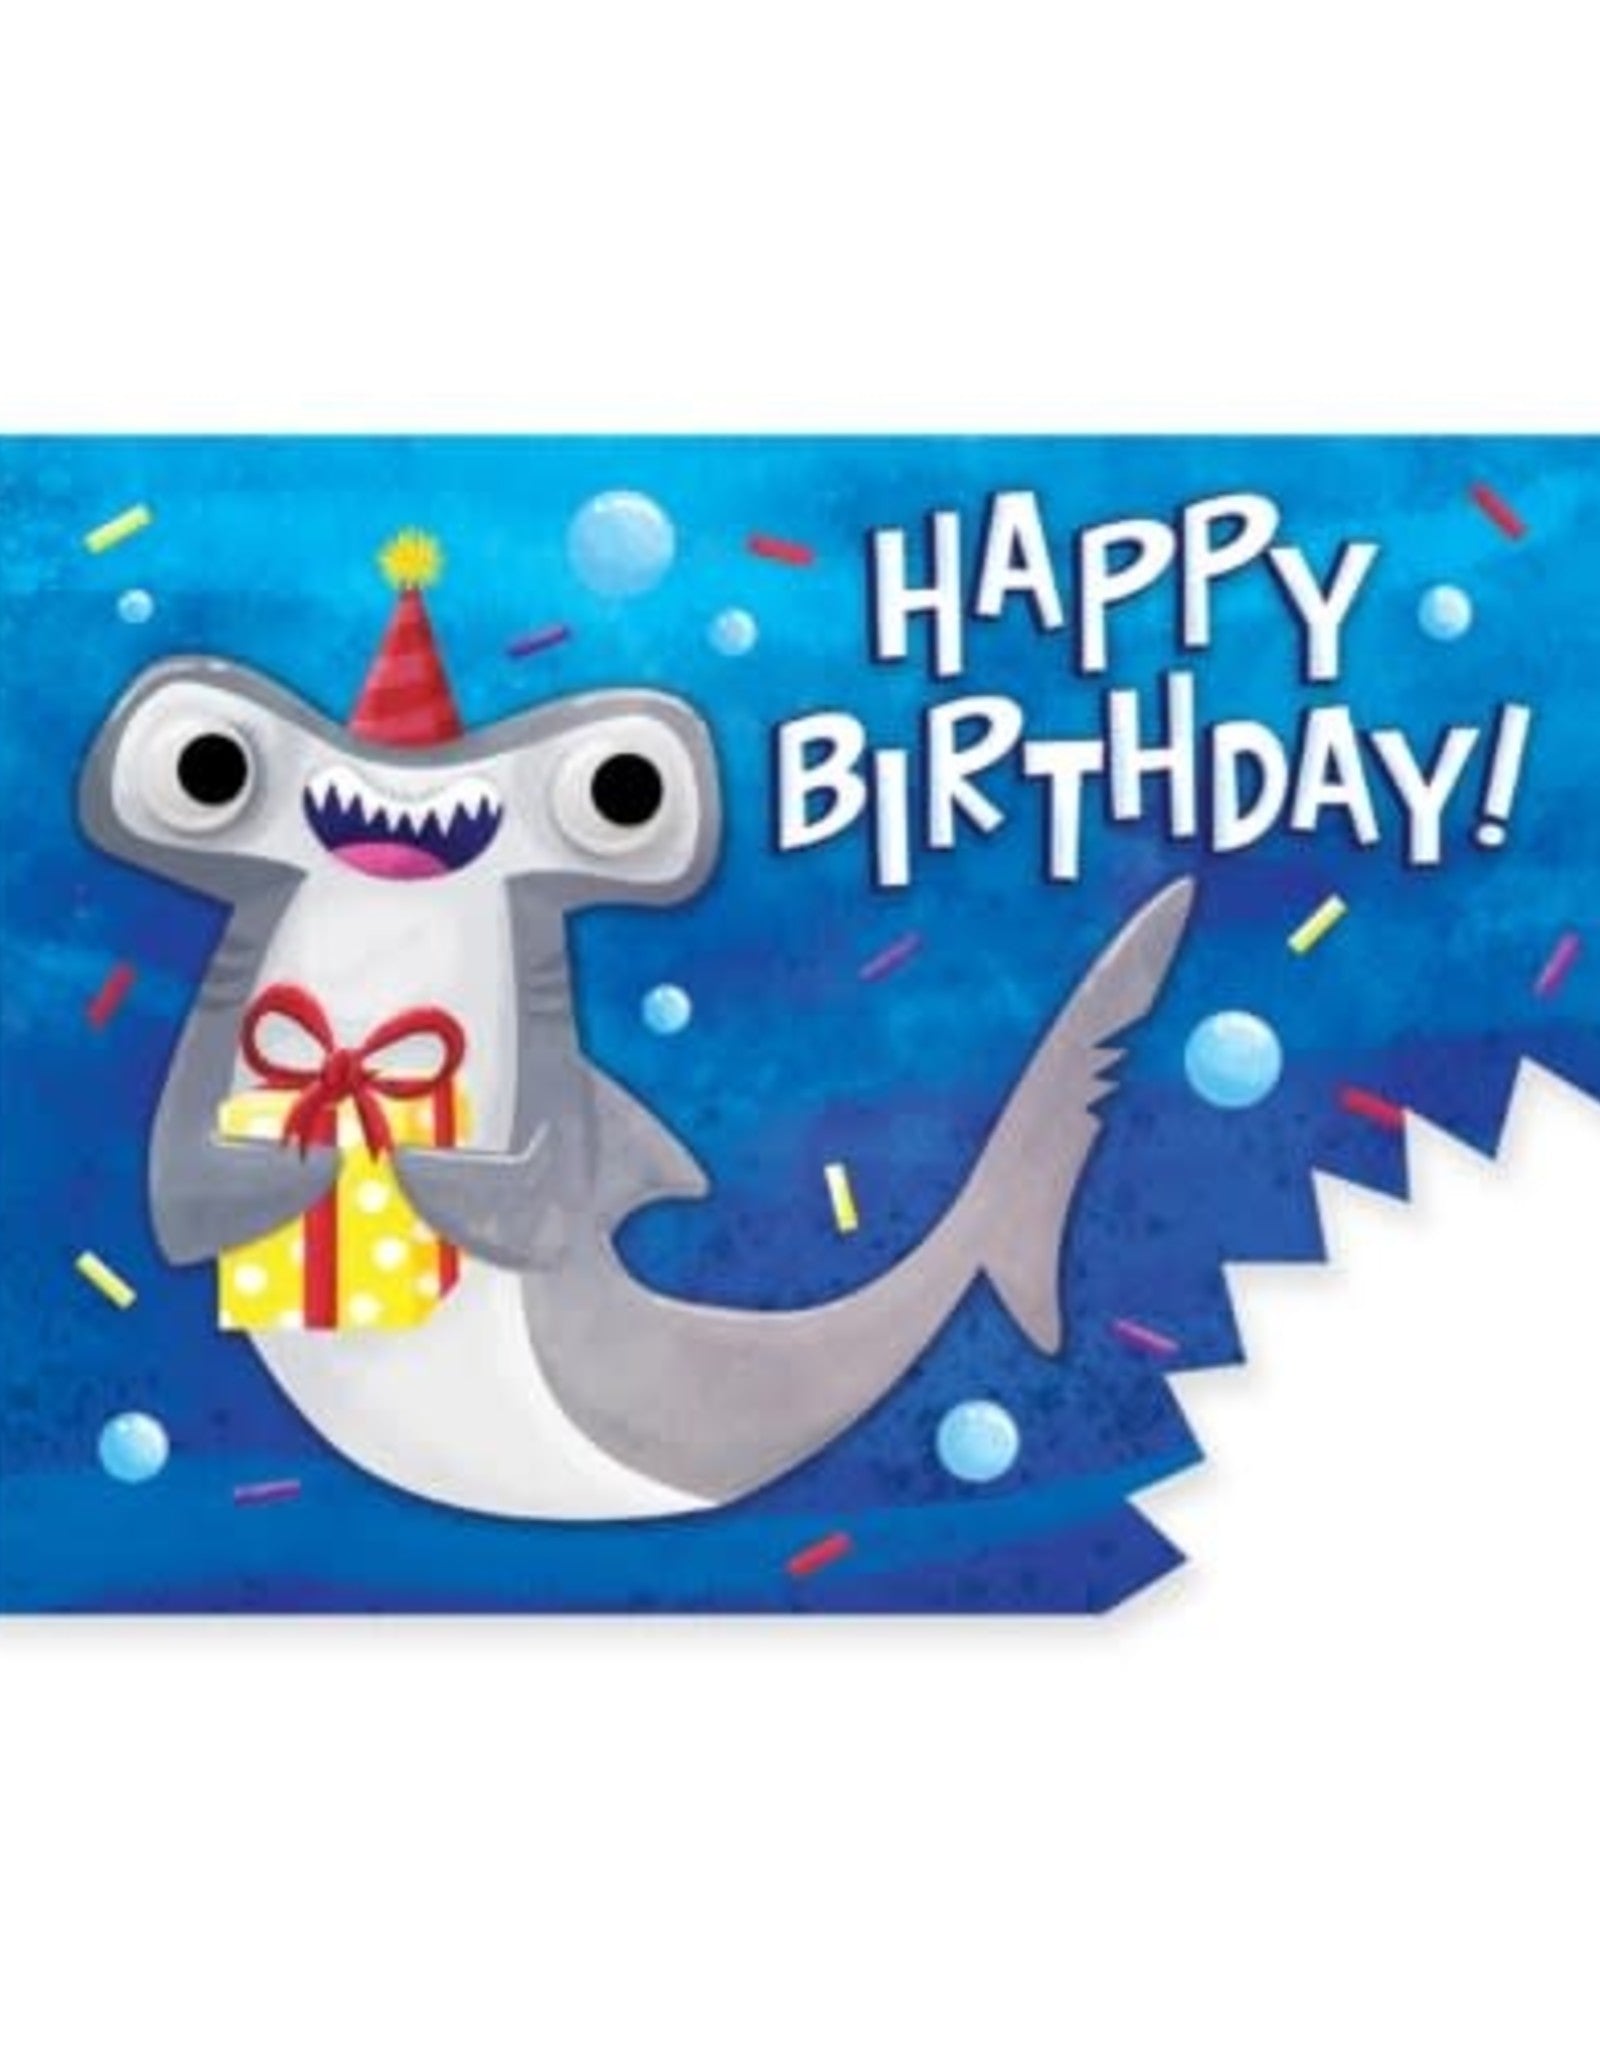 Shark with Googly Eyes Birthday Card by Peaceable Kingdom